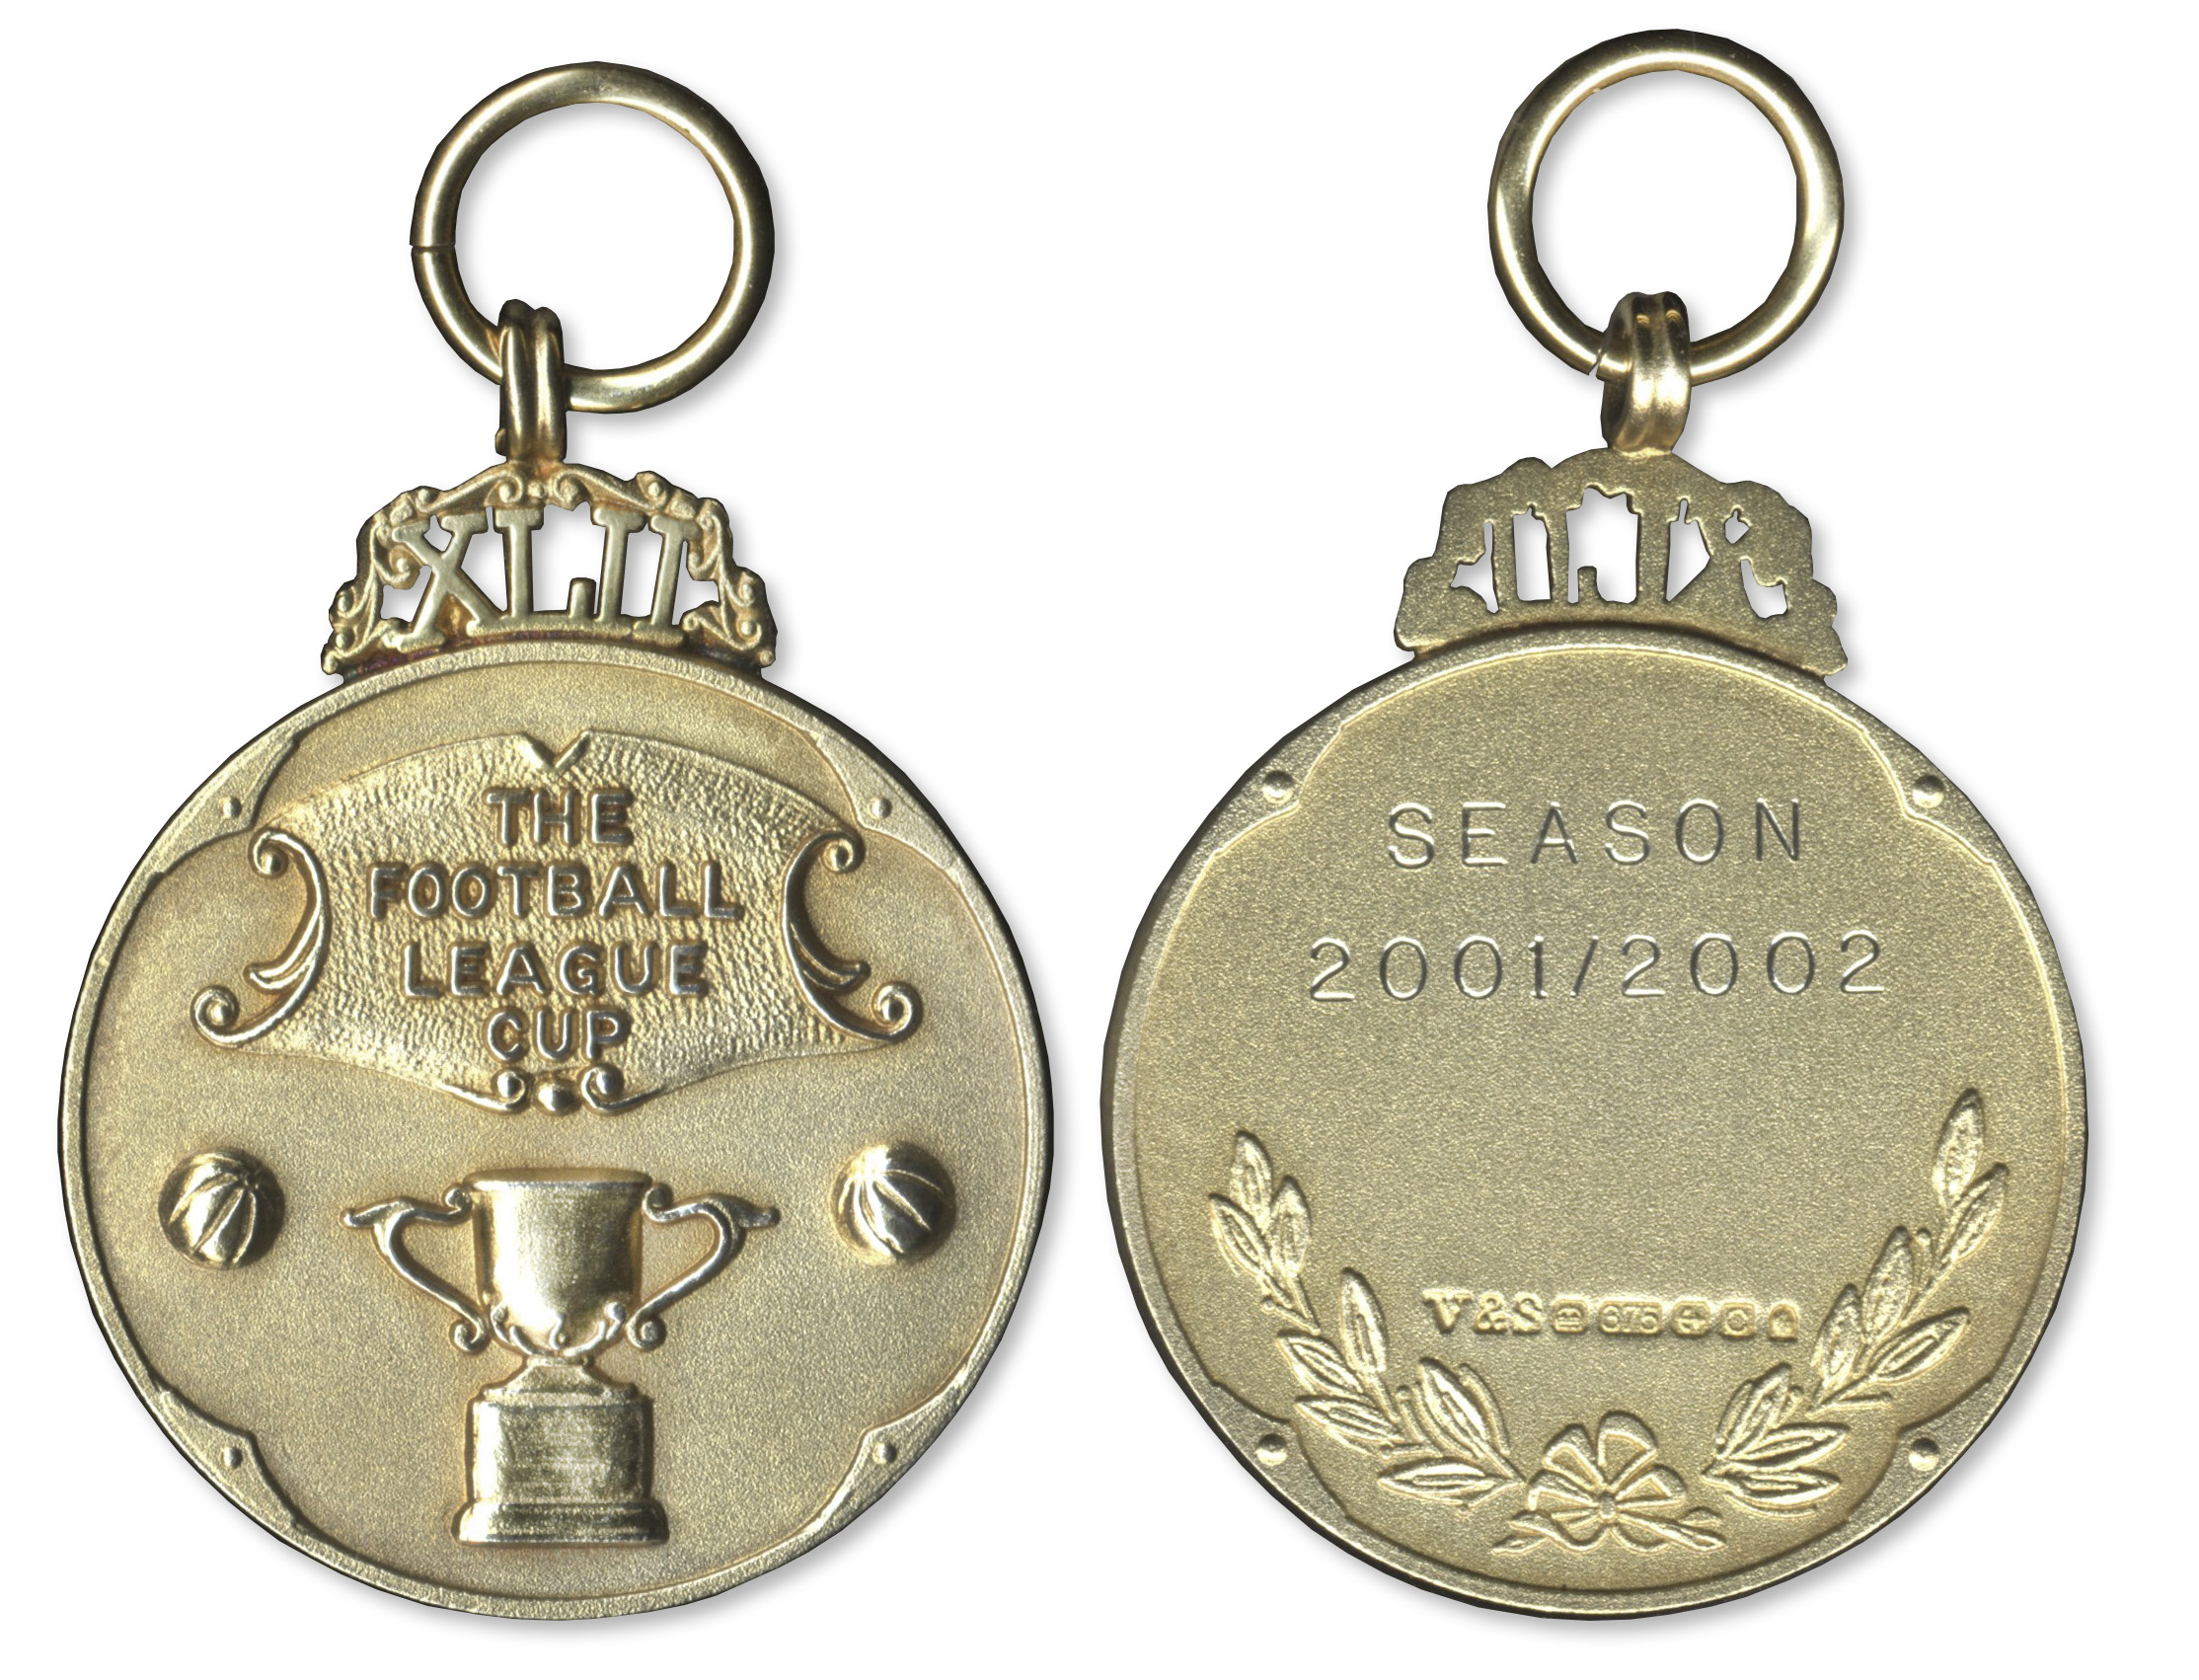 2002 Football League Cup Winner's Medal